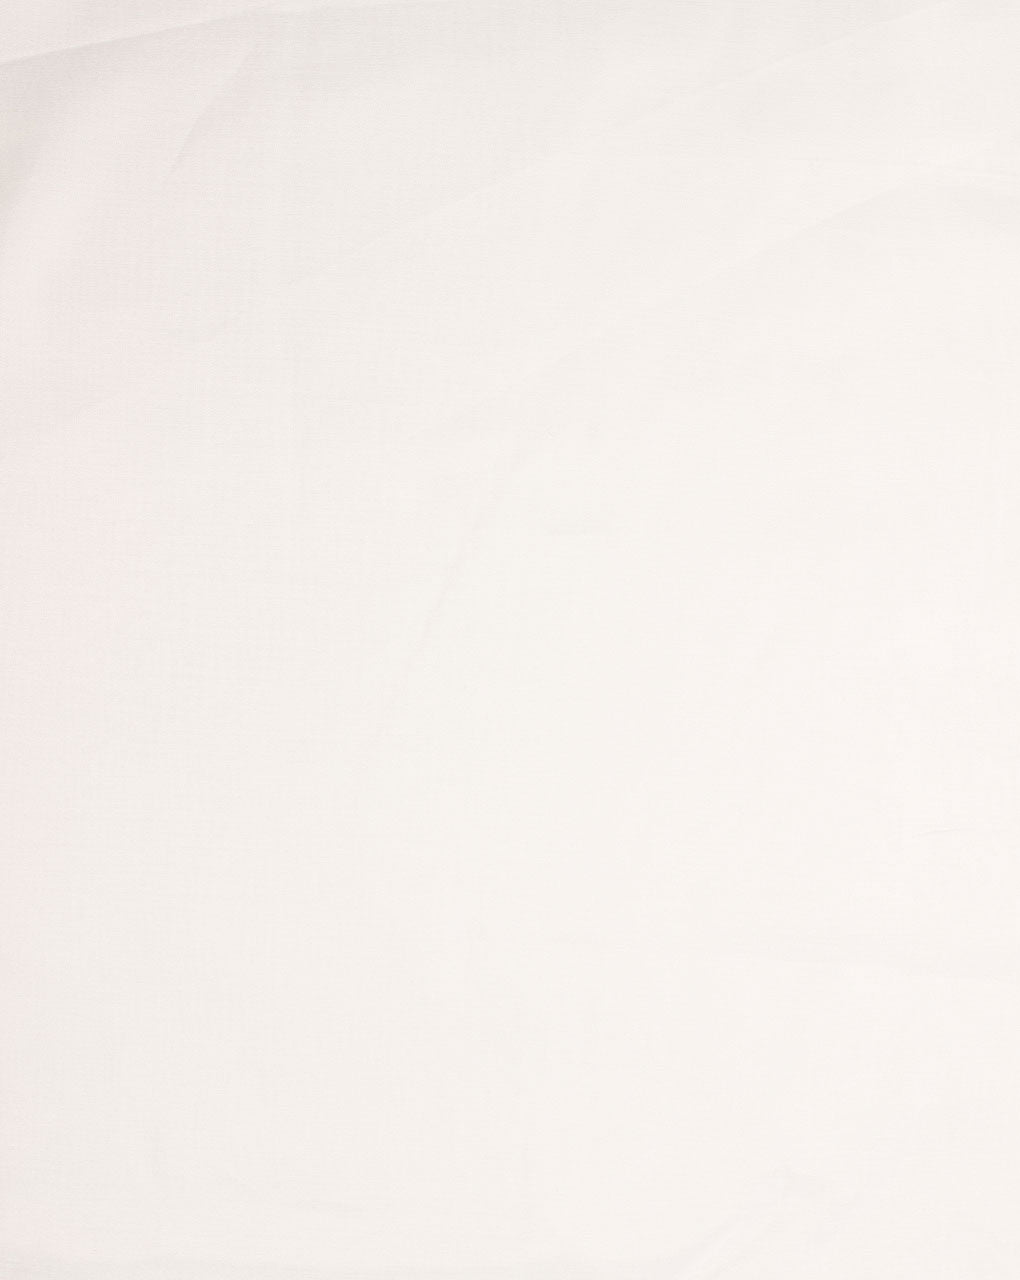 Dyeable Viscose Muslin Fabric ( Width 56 Inch ) - Fabriclore.com